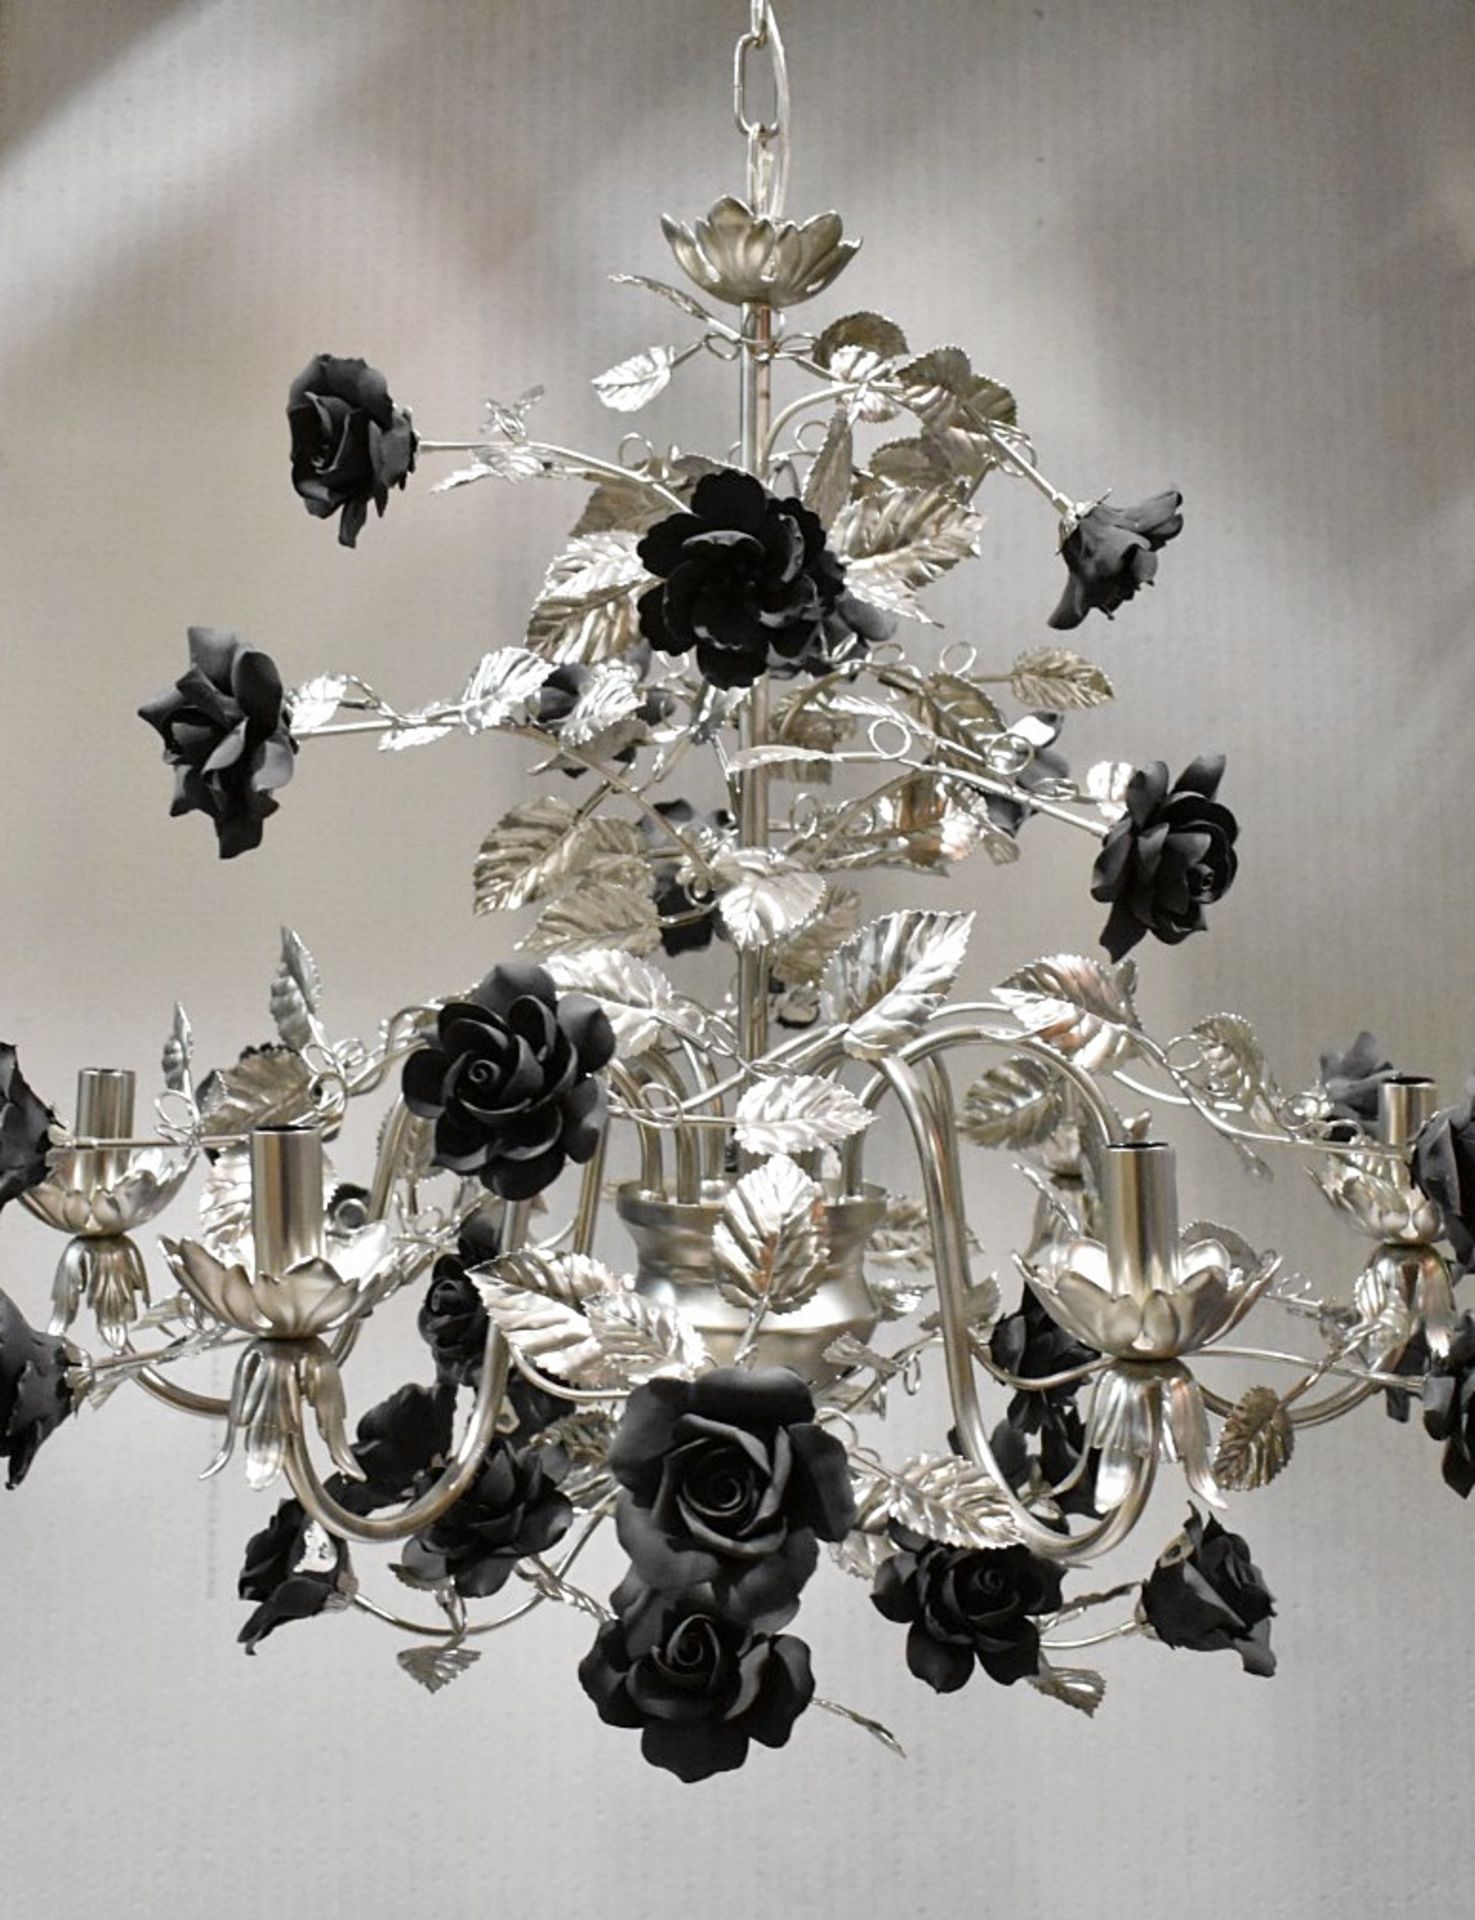 1 x VILLARI Opulent Platinum Plated 6-Arm Luxury Chandelier With Porcelain Decoration - RRP £12,000 - Image 5 of 17